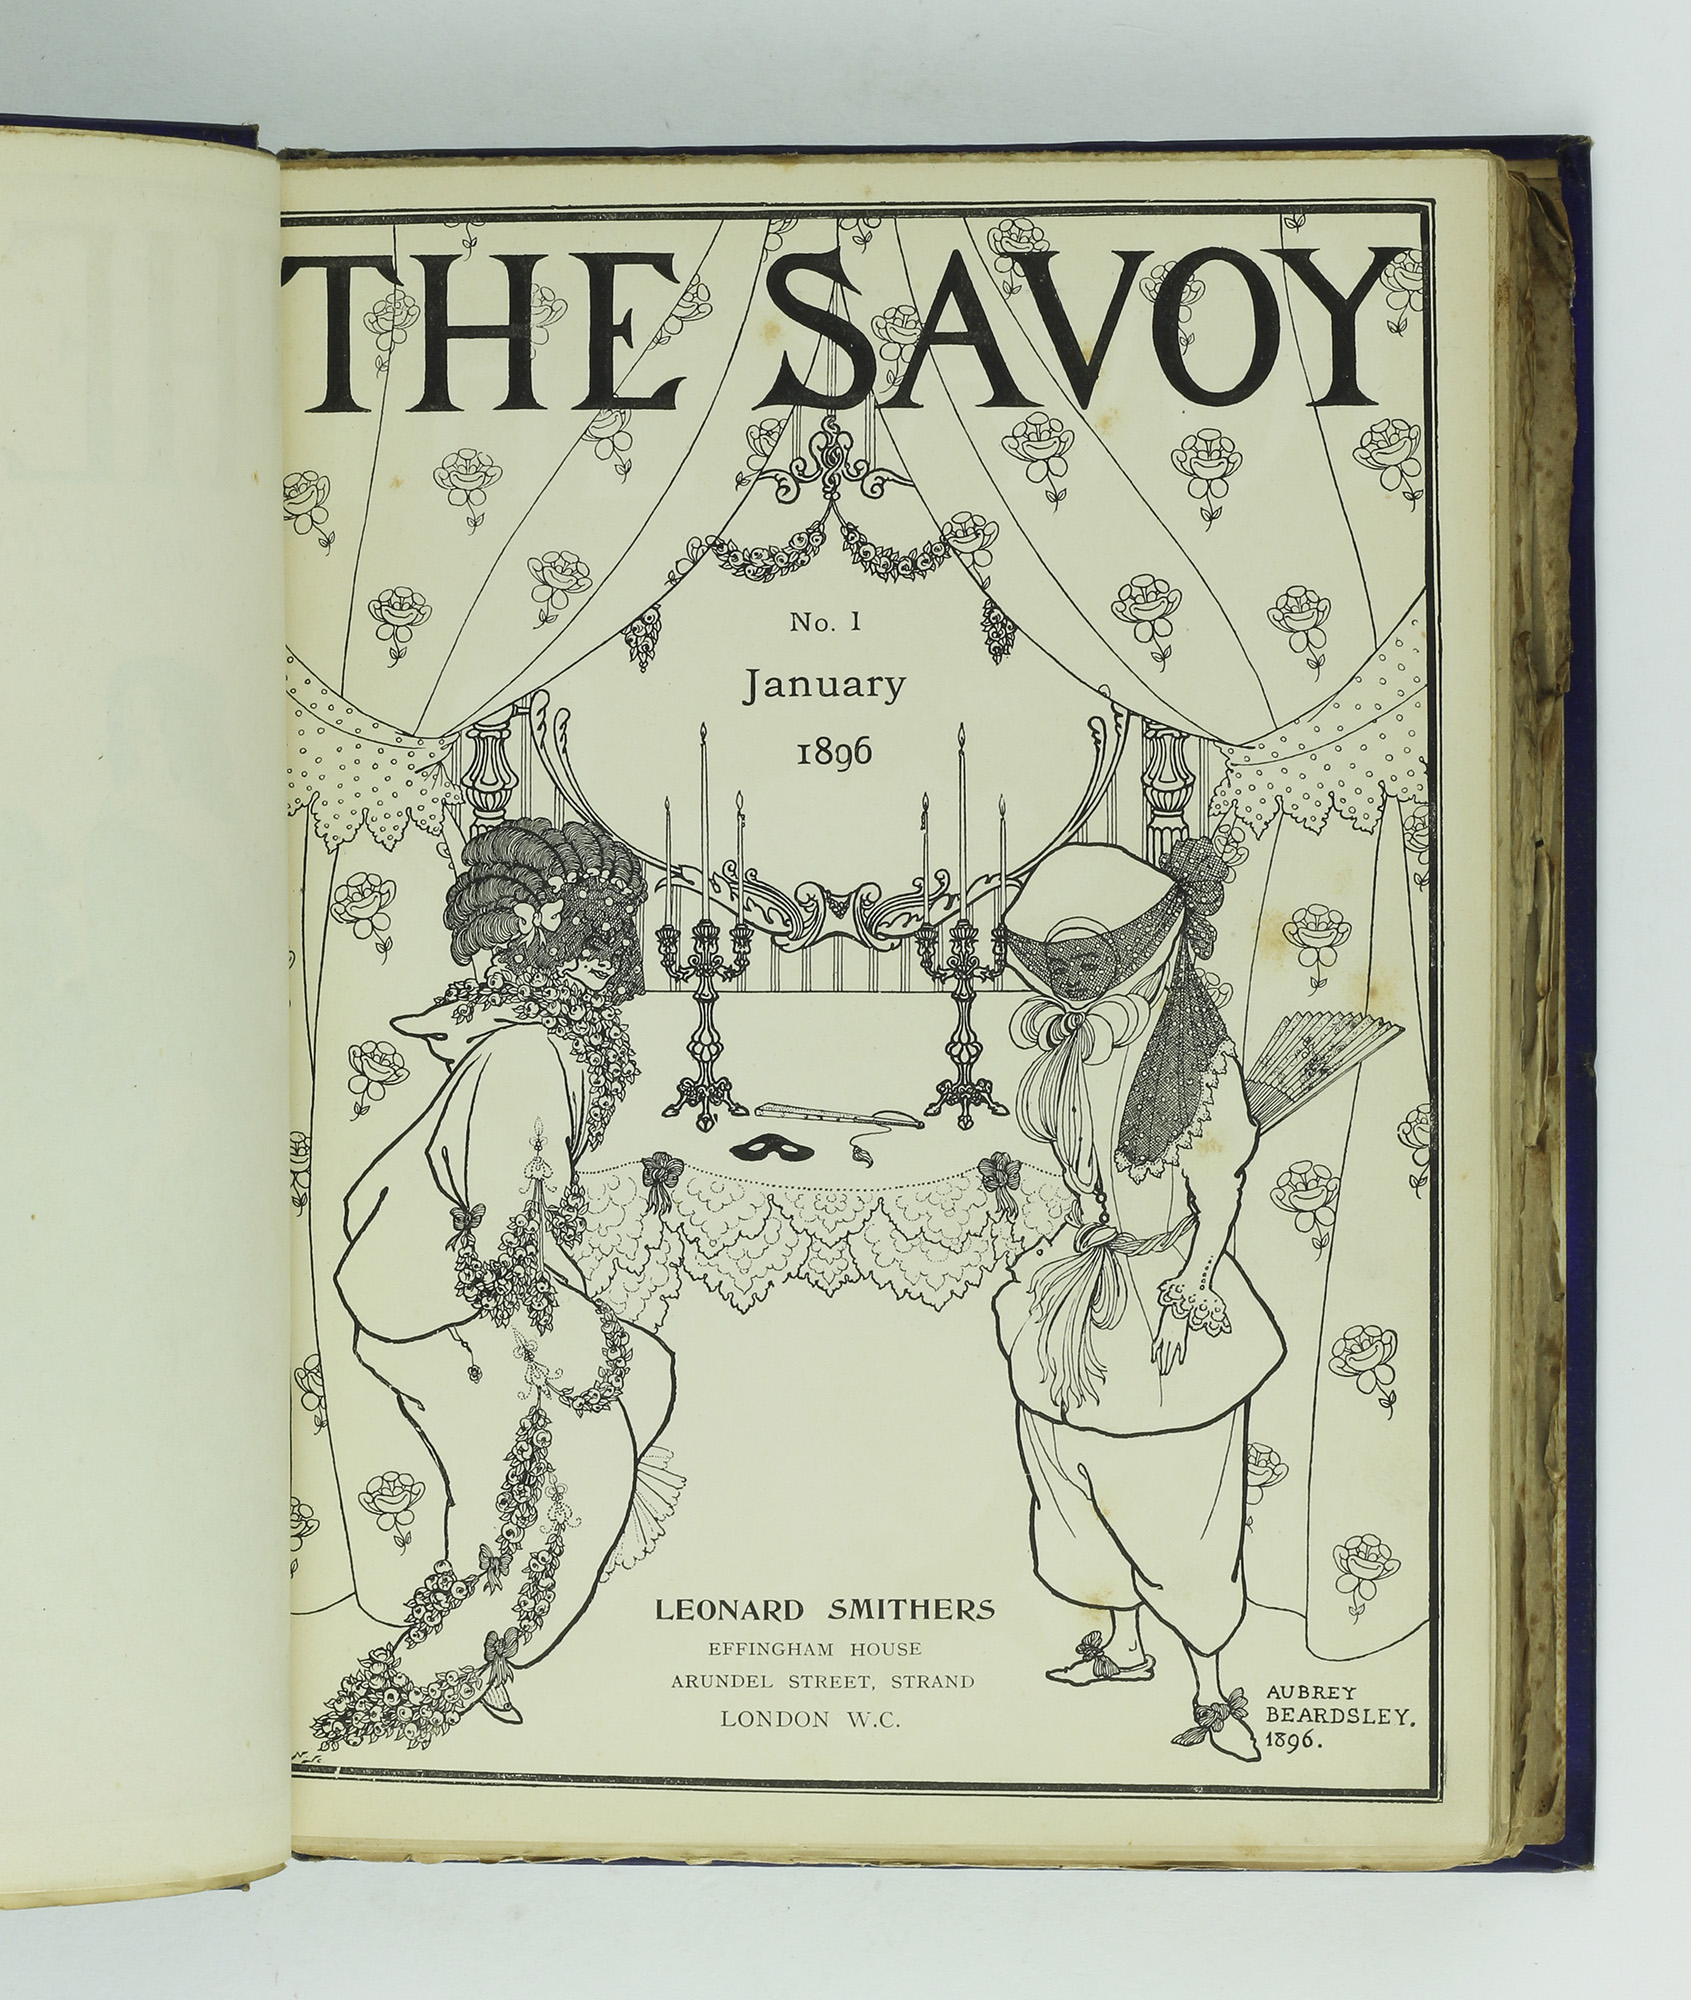 The Savoy by BEARDSLEY